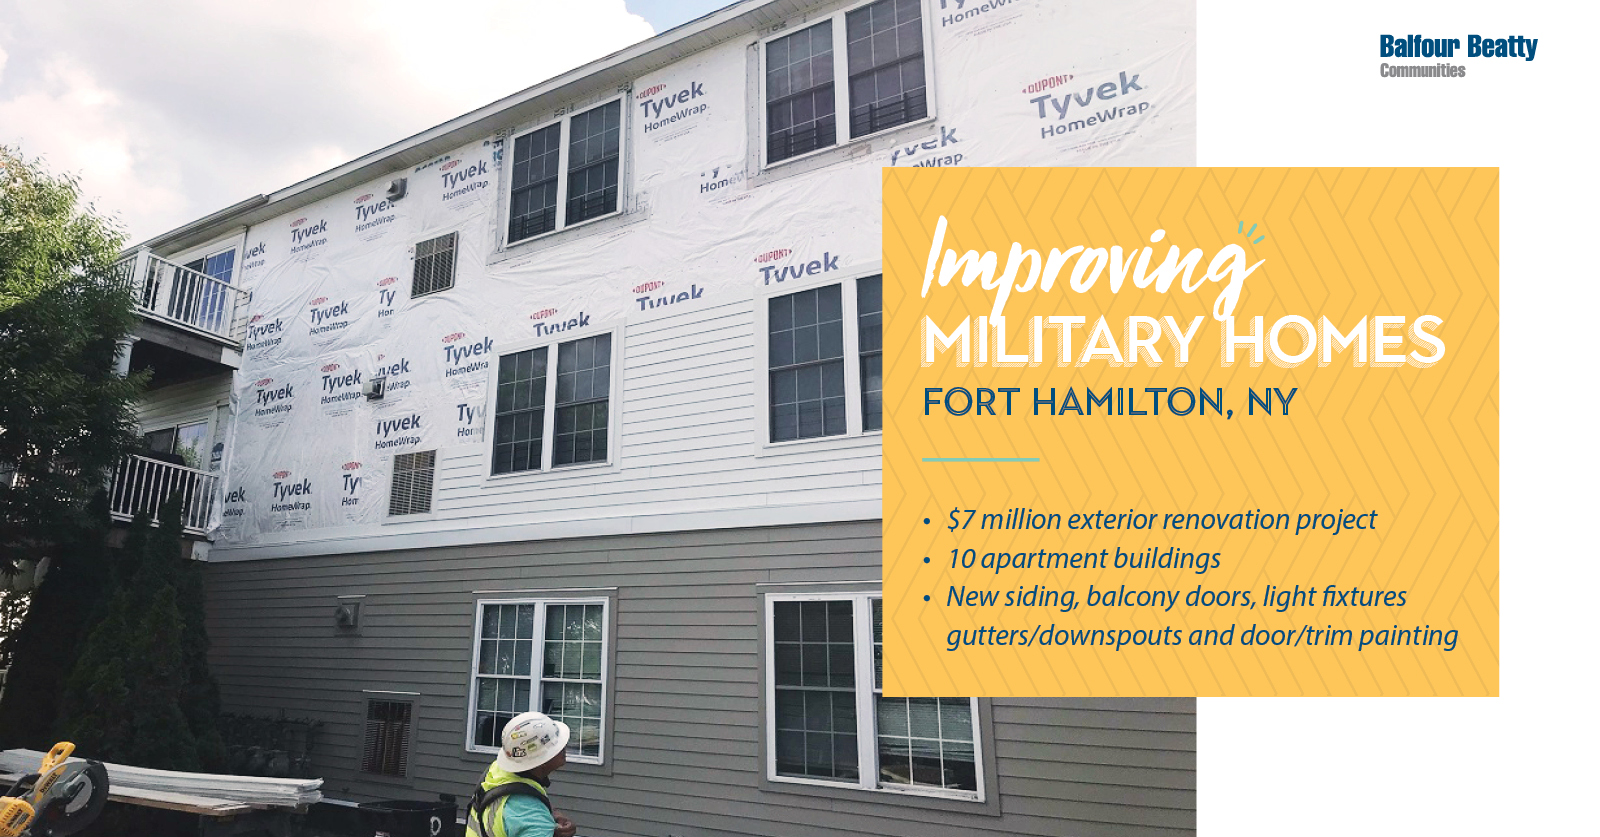 Balfour Beatty Communities Launches $7 Million Fort Hamilton Renovation Project